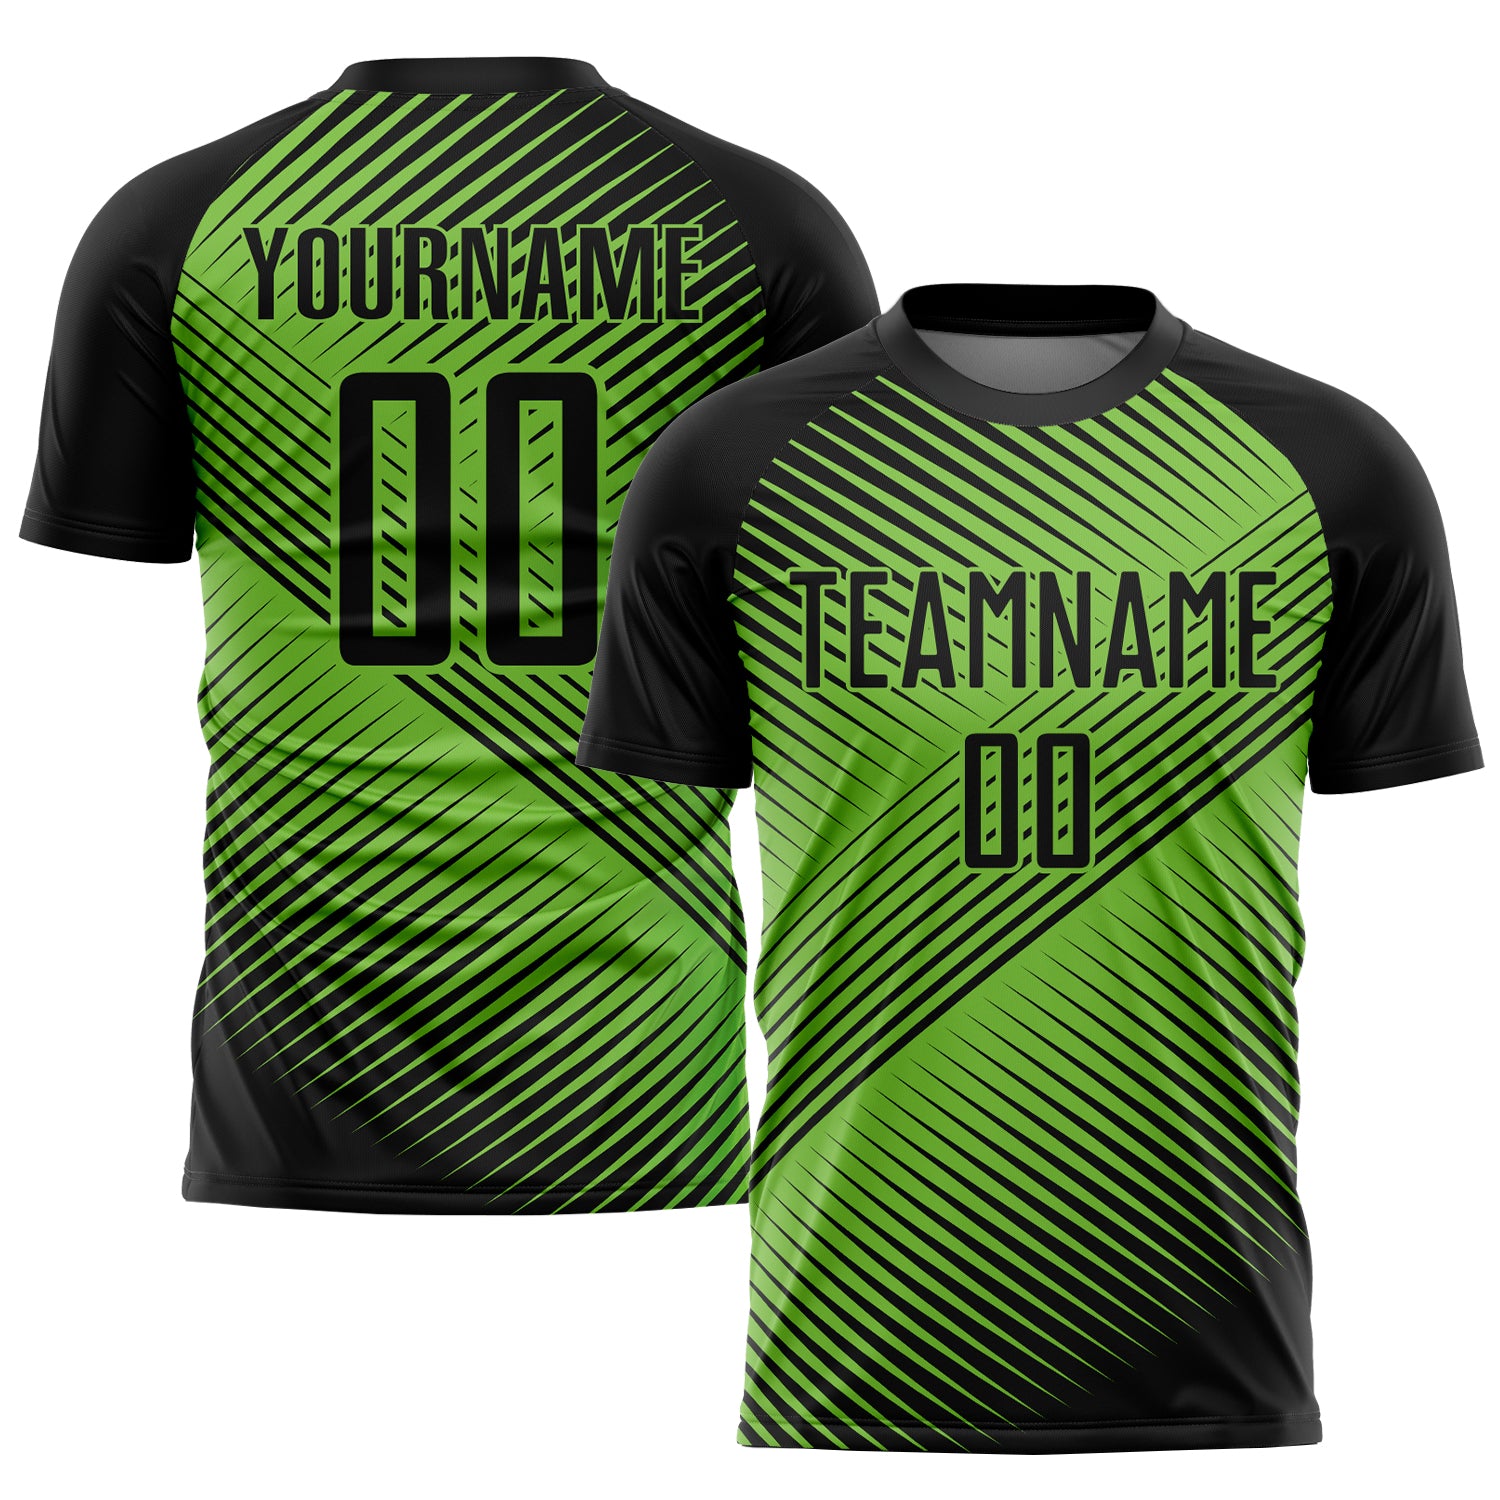 Neon Green Soccer Jersey Custom